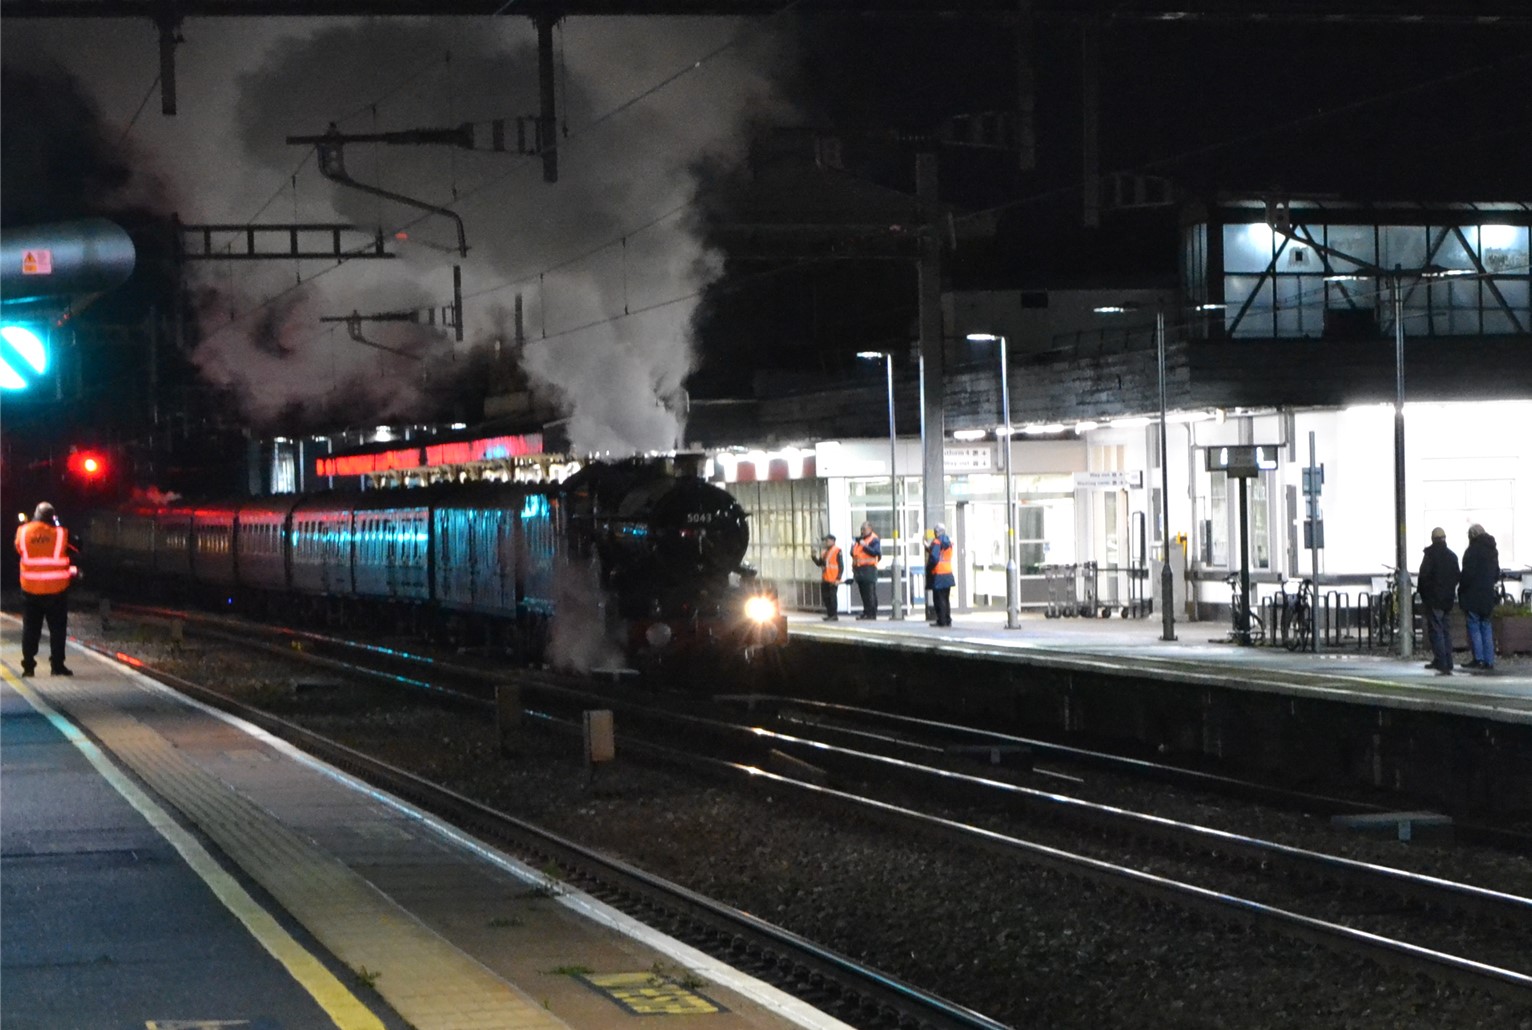 Ken Mumford – Swindon Steam at night